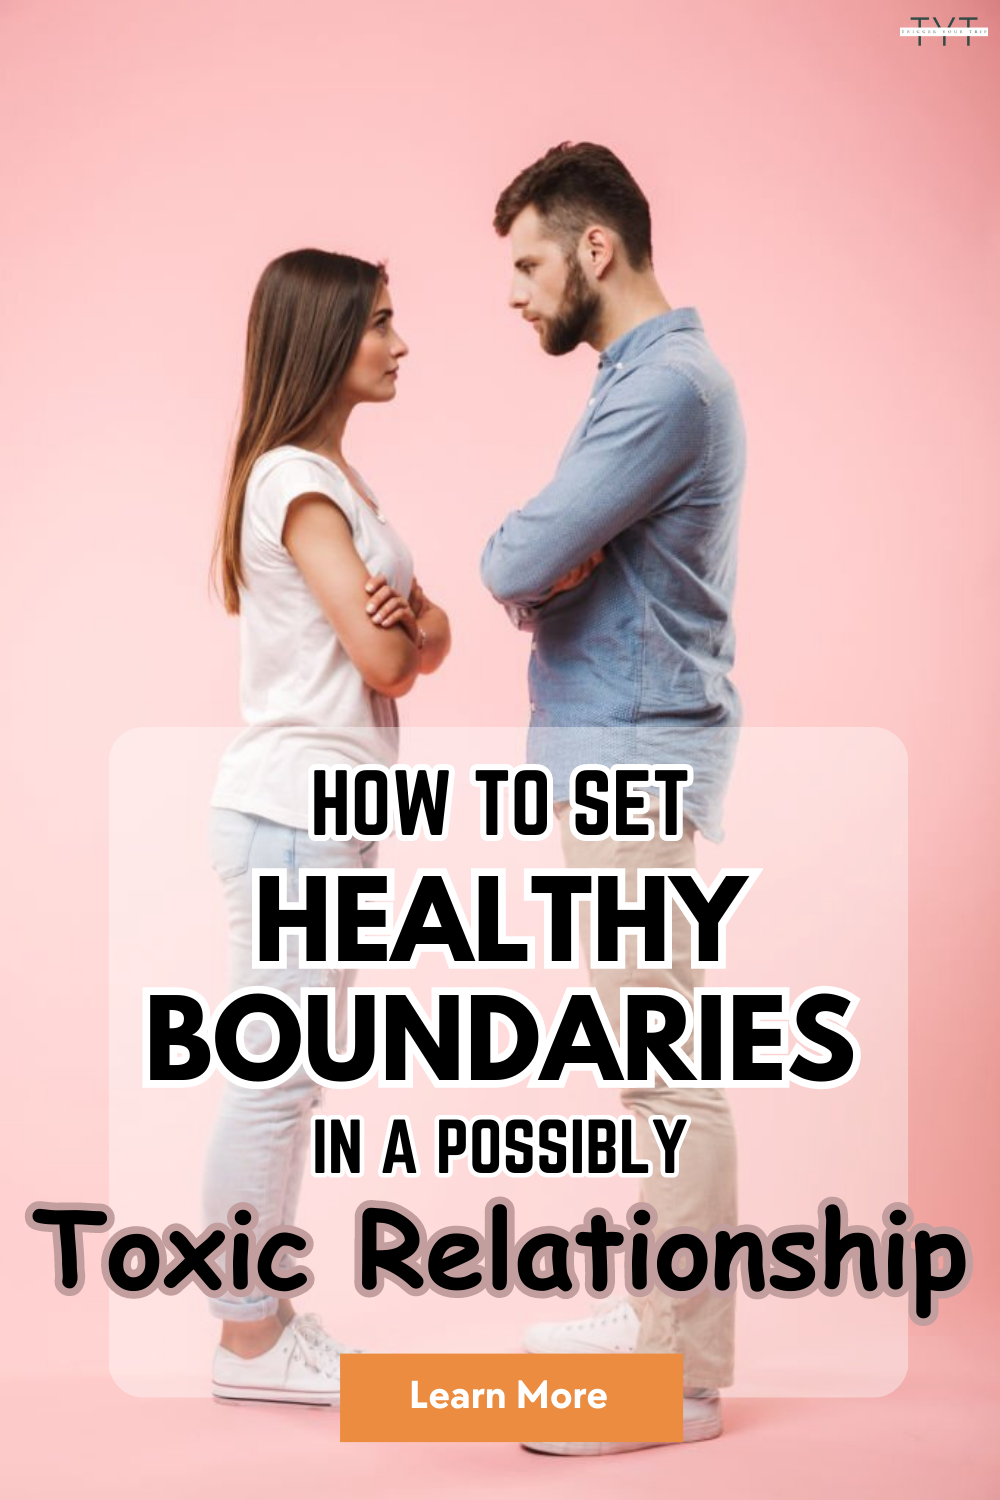 do your partner's boundaries make you feel uncomfortable? 